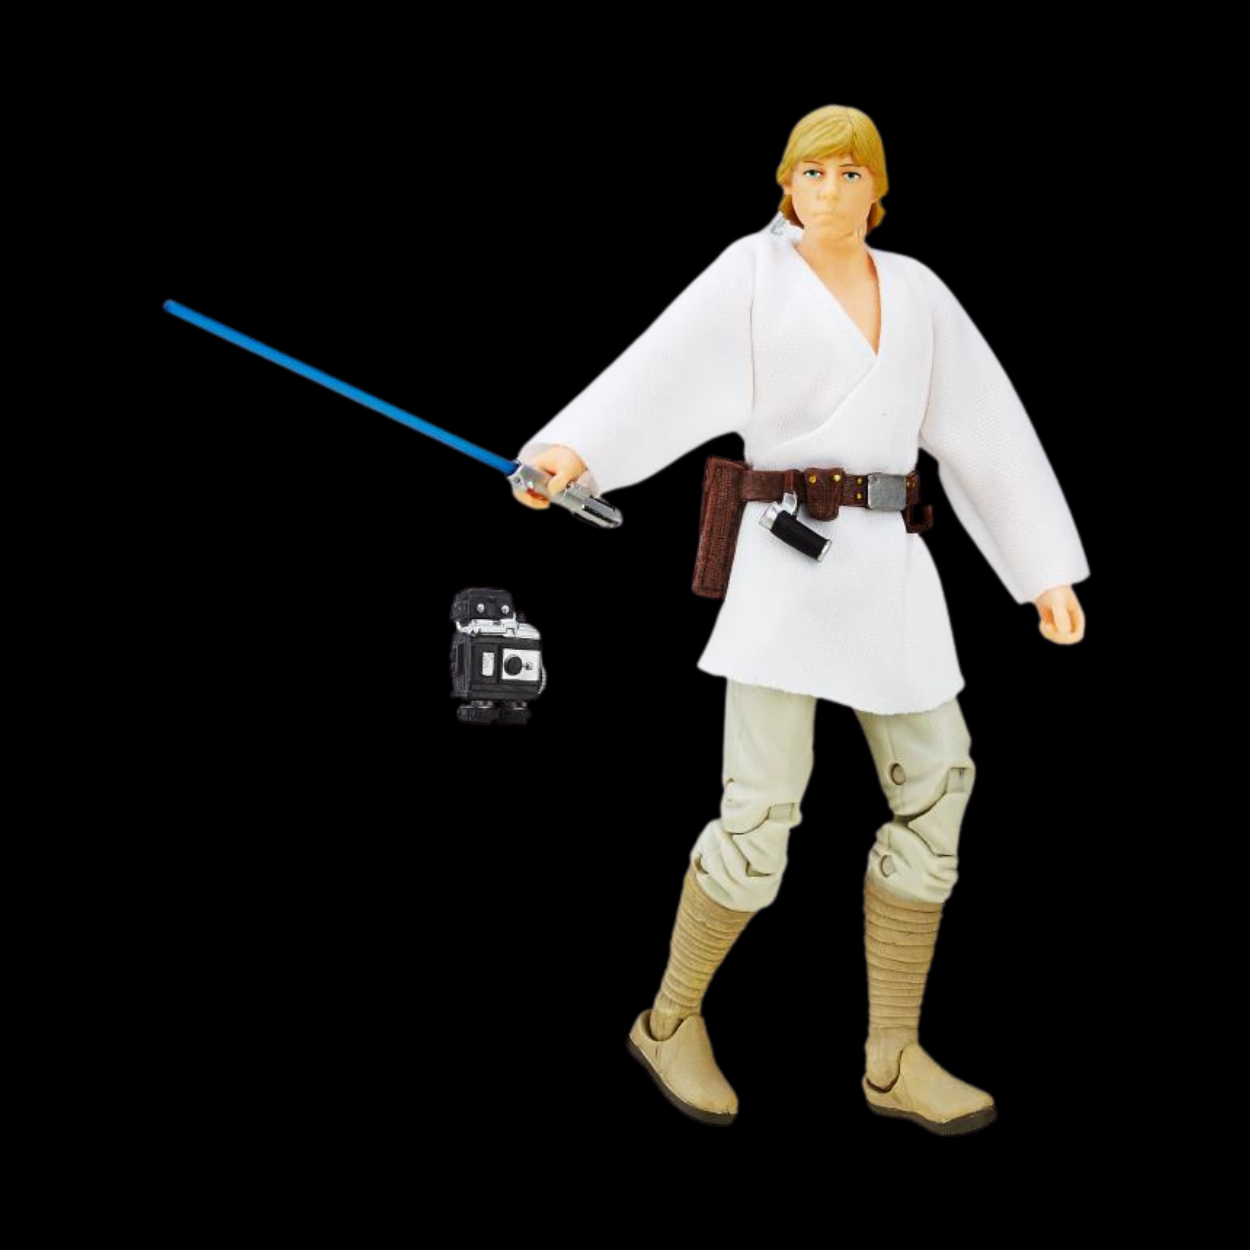 Luke Skywalker Black Series Action Figure